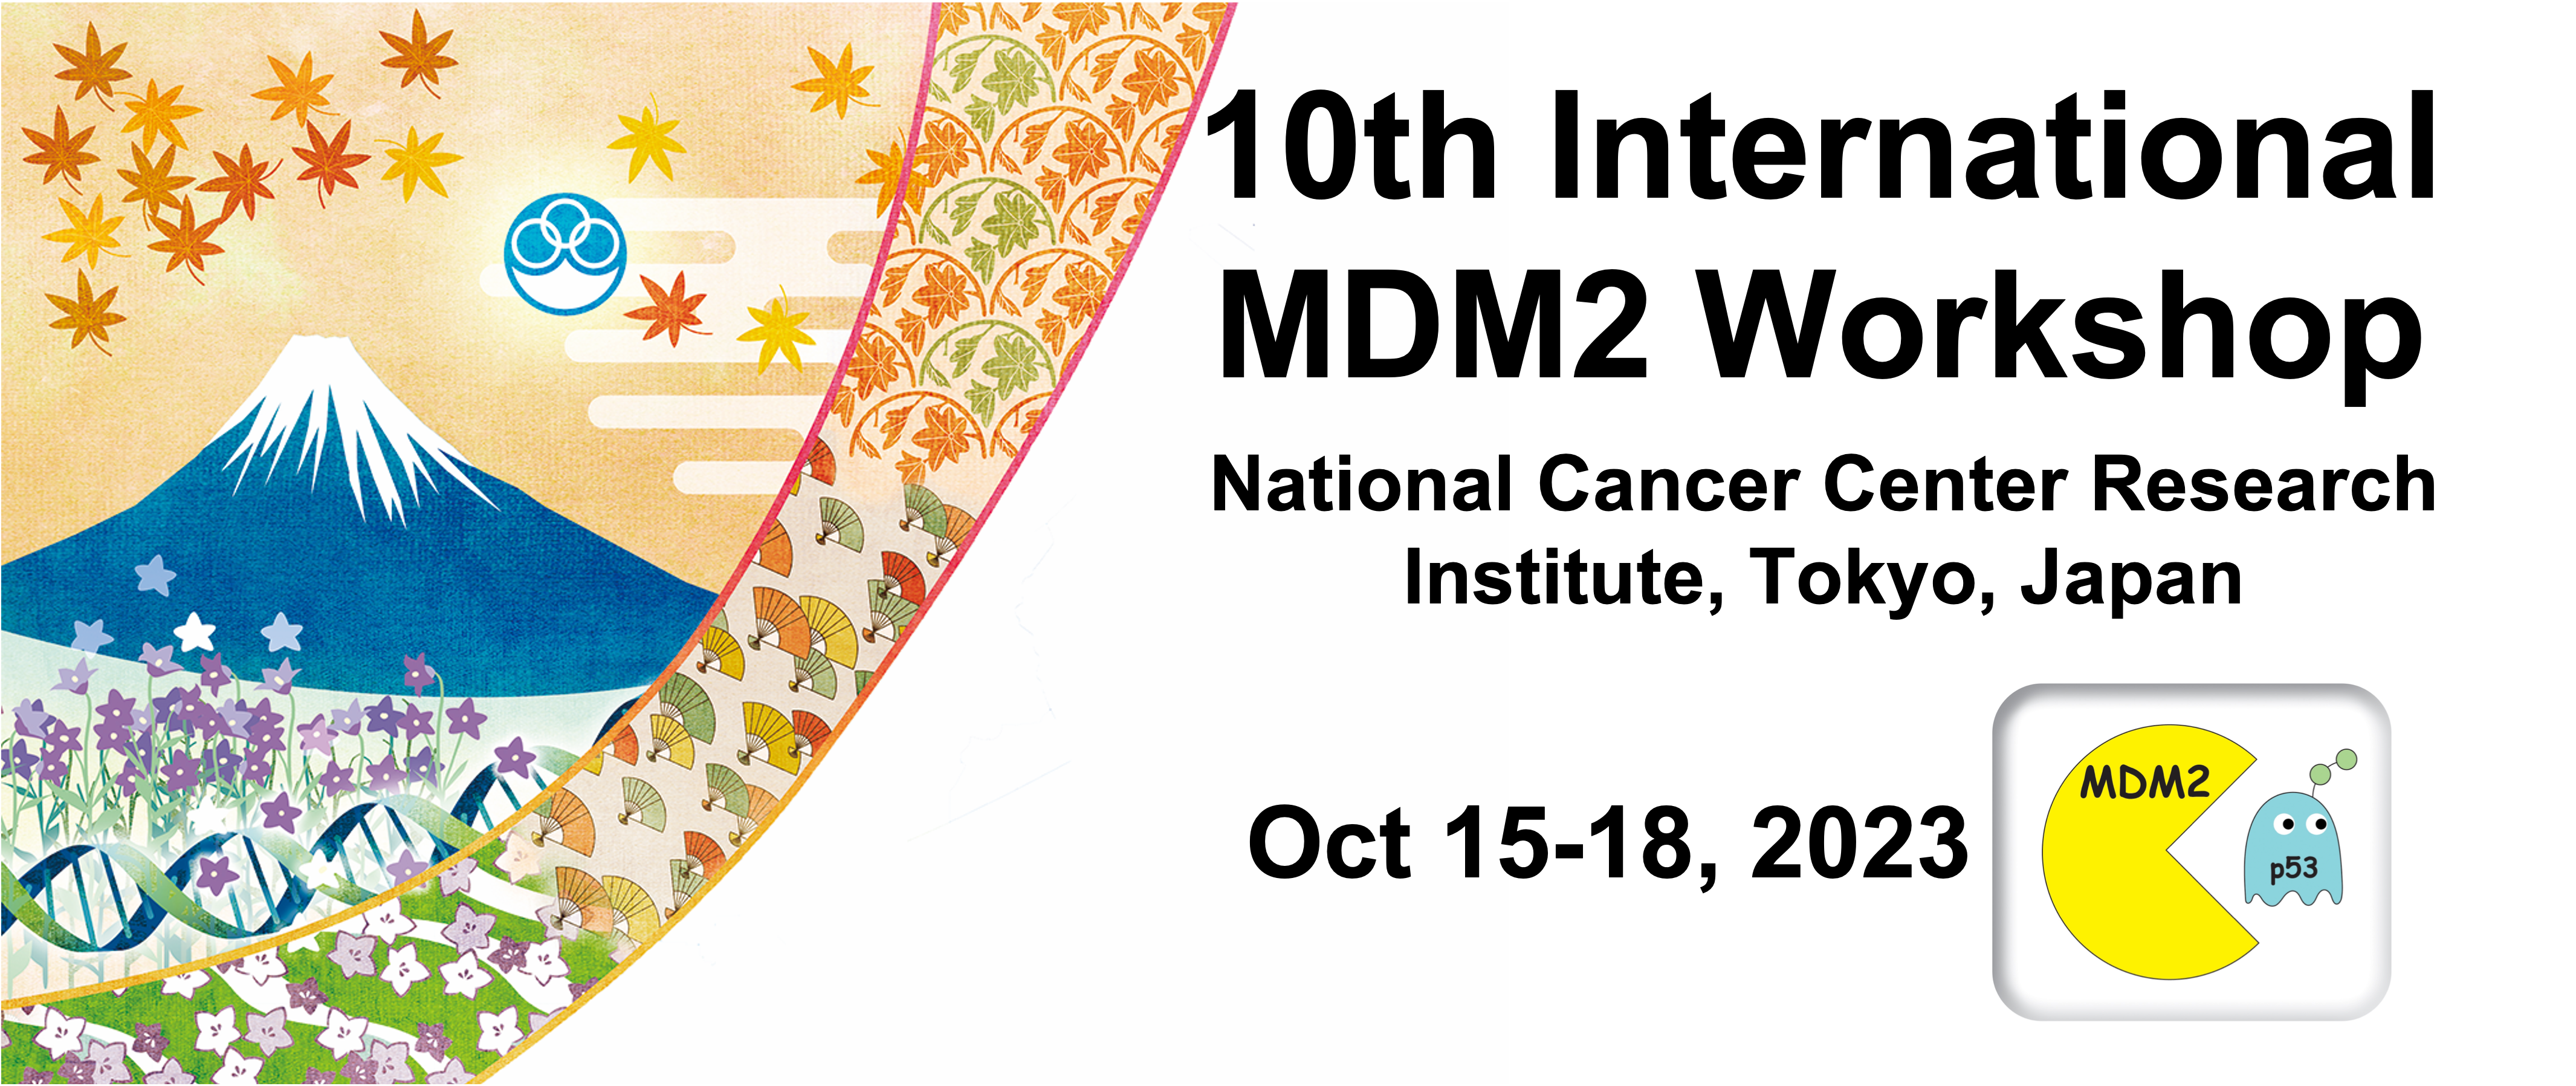 the 10th International MDM2 Workshop